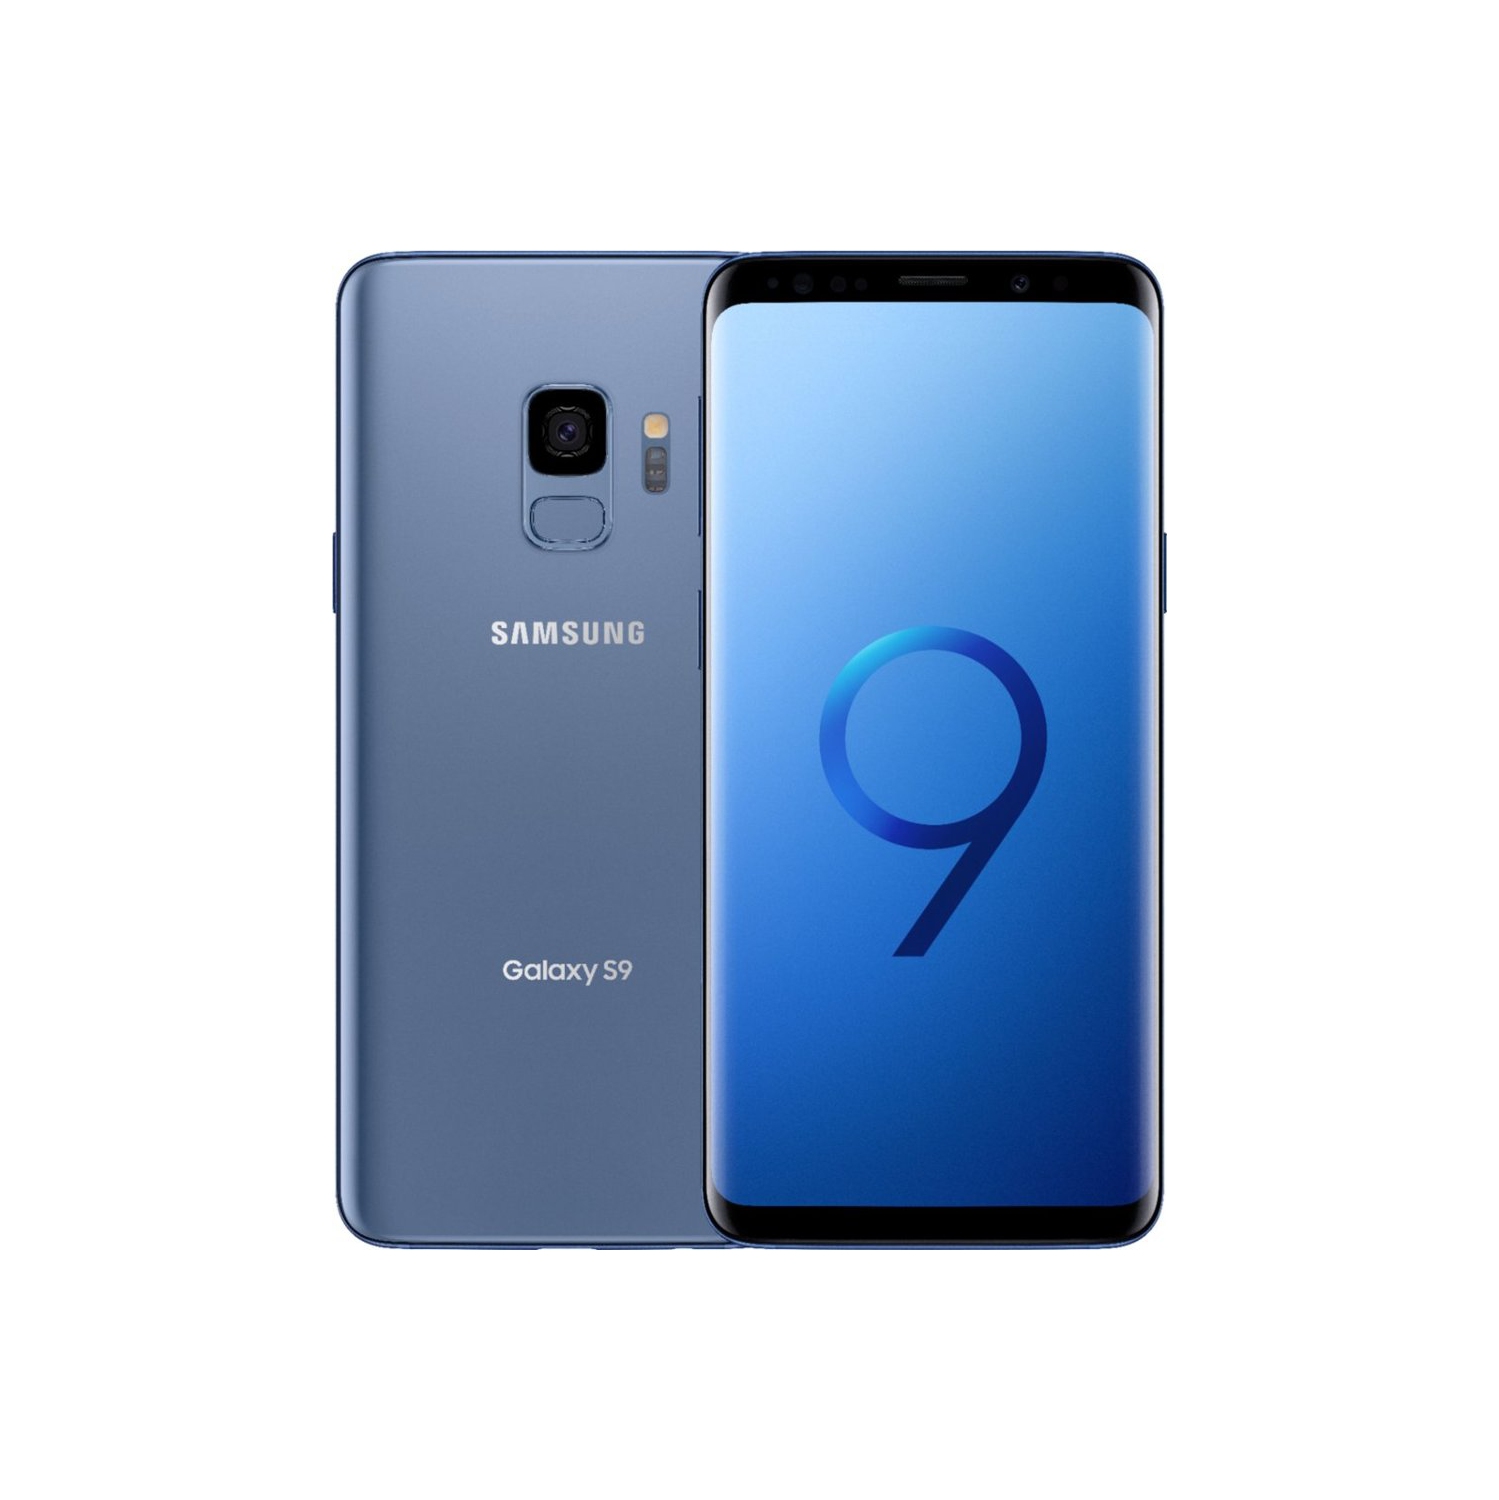 Samsung Galaxy S9 64GB Smartphone - Coral Blue - Unlocked - Open Box